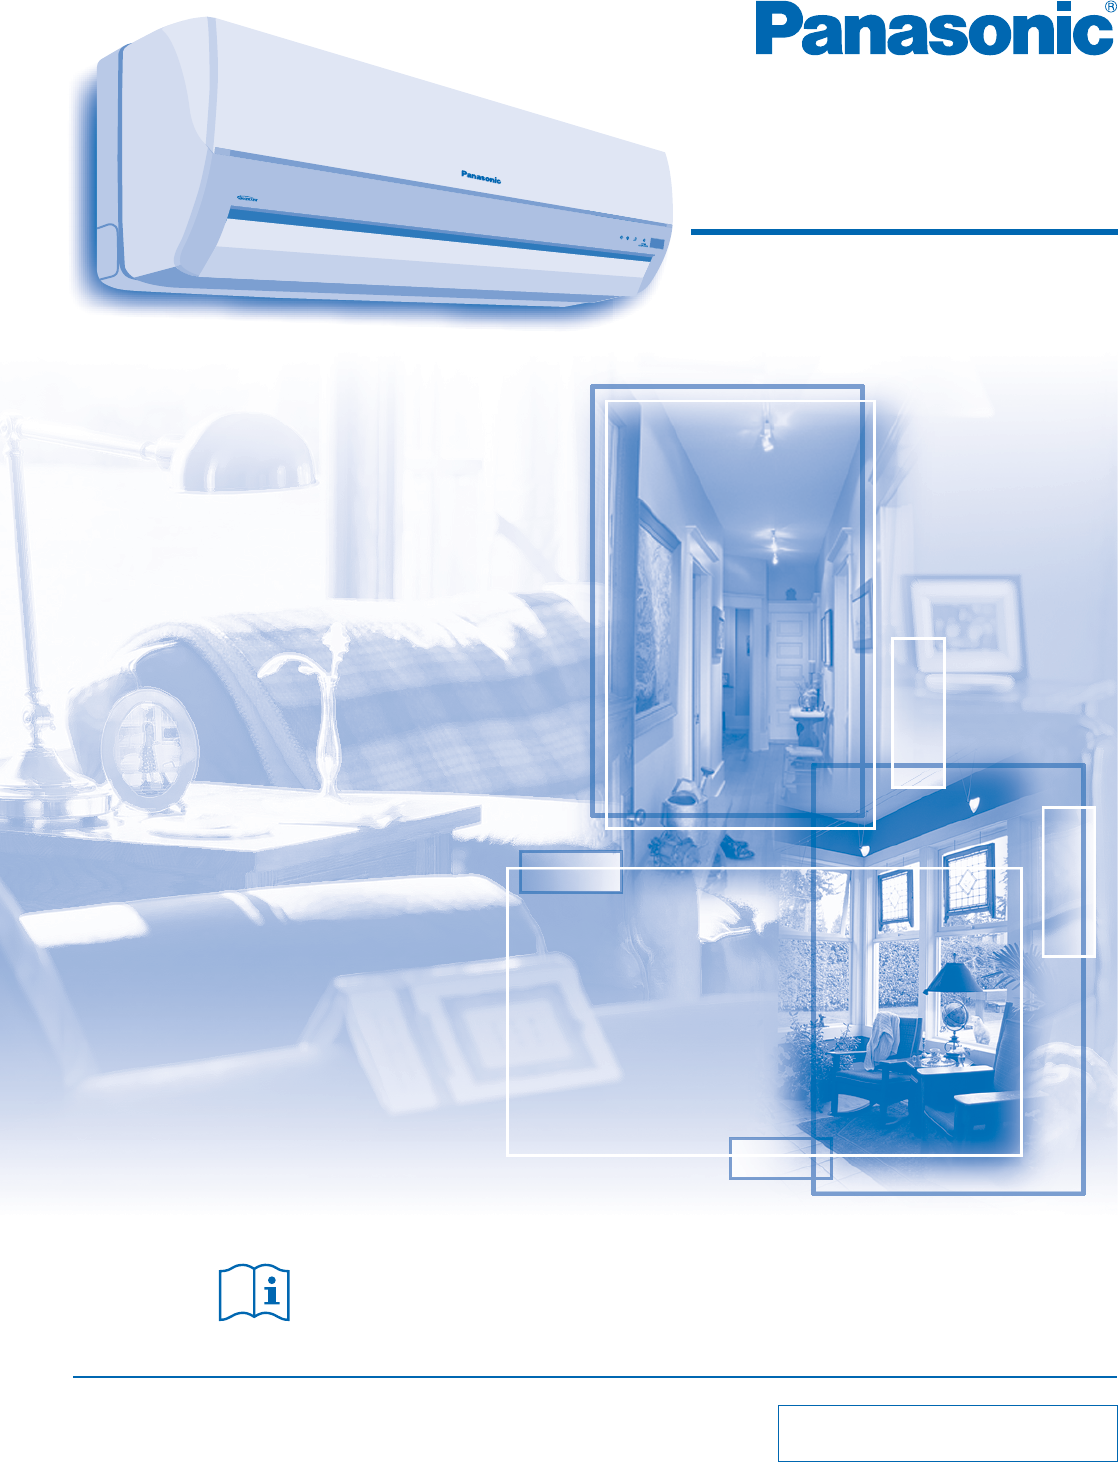 Panasonic air conditioning user manual